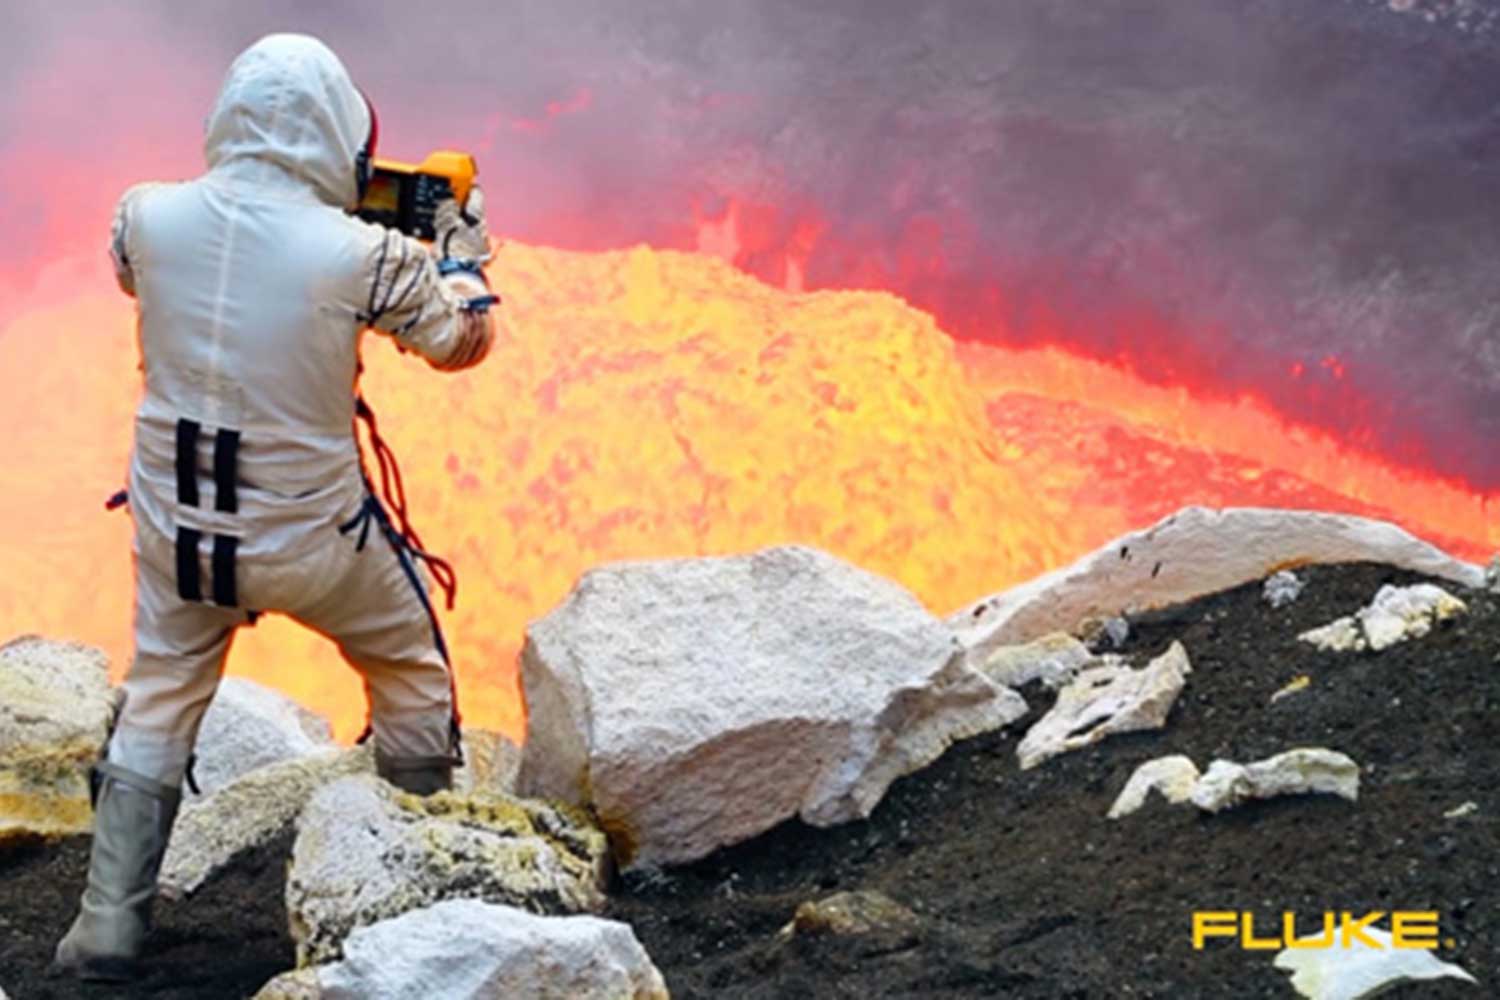 The Fluke TiX560 Infrared Camera displays thermal signatures at the Marum Volcano